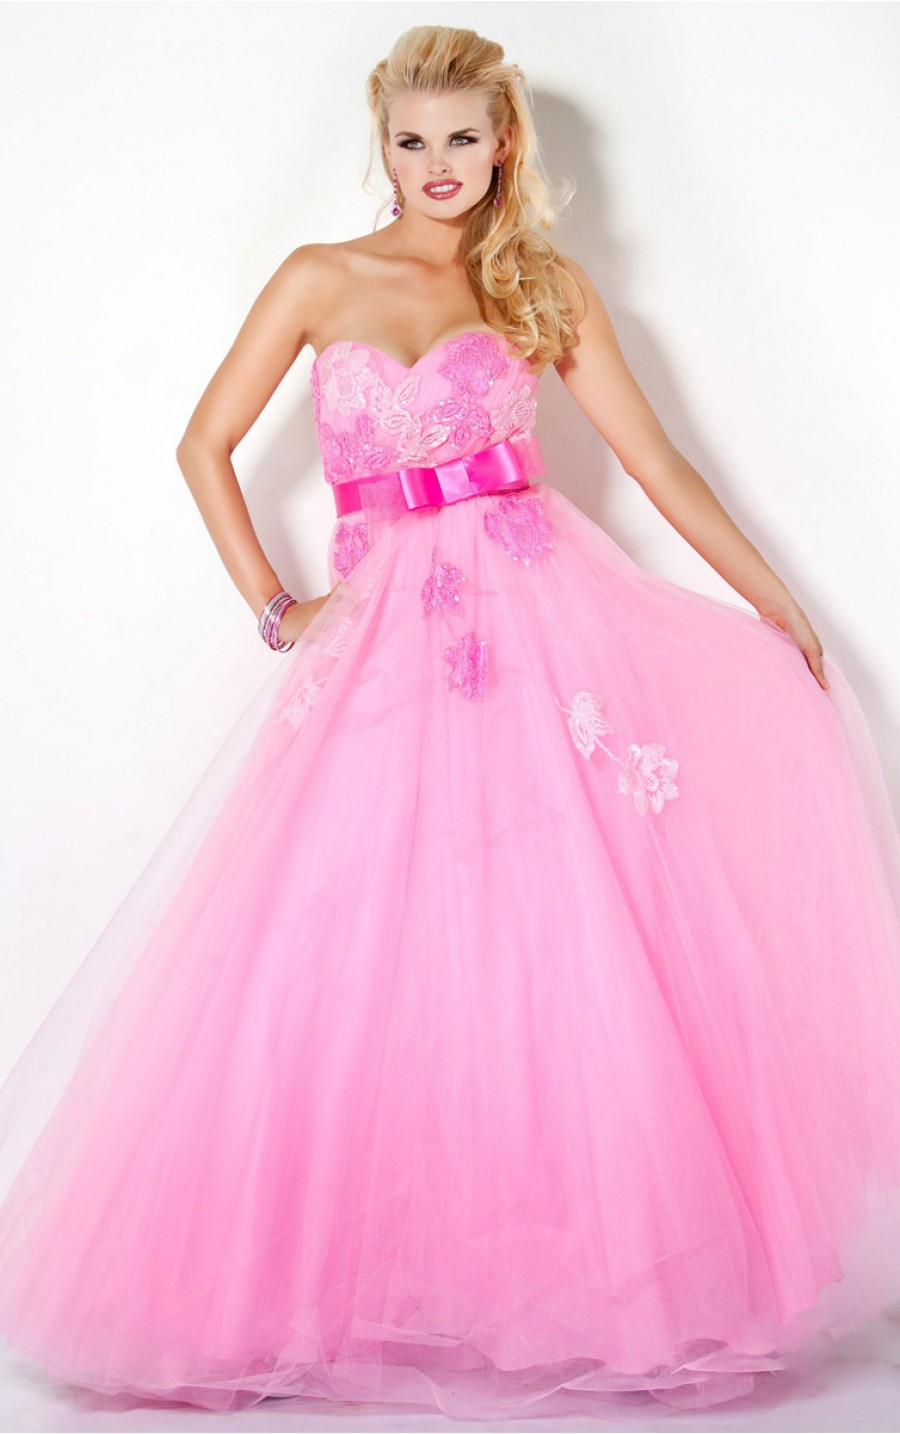 Princess Dress Picture Collection | DressedUpGirl.com